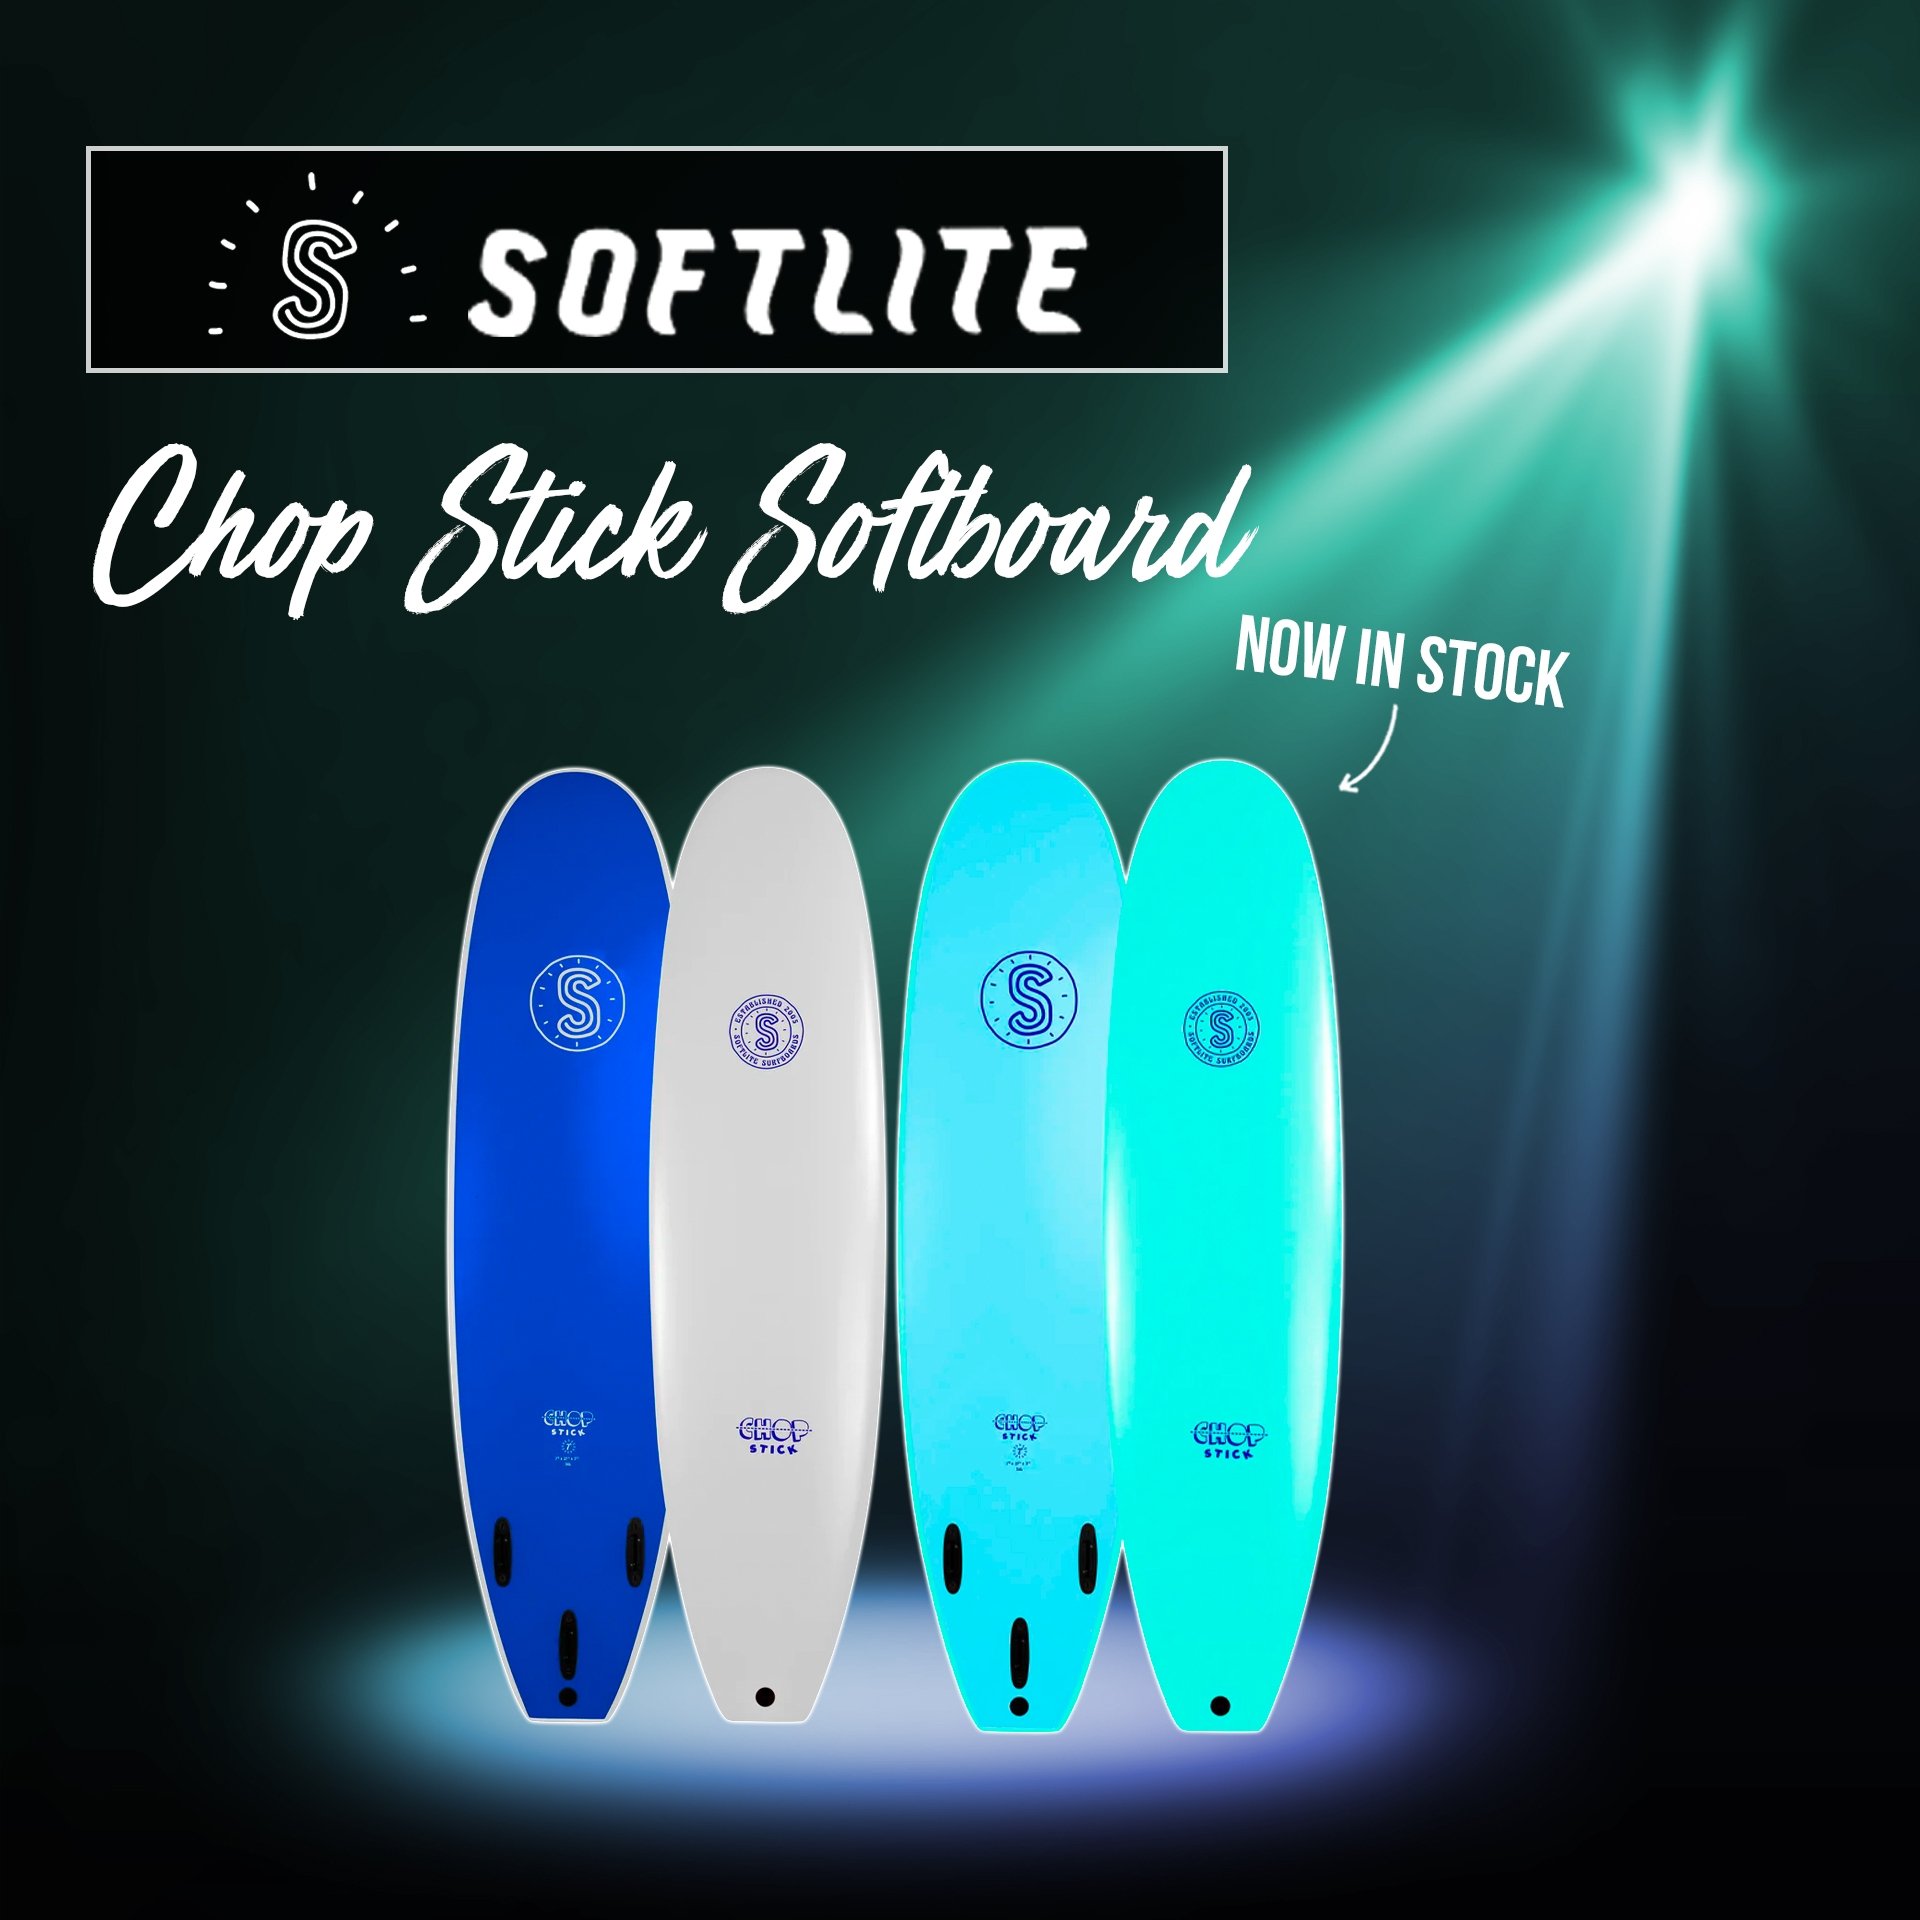 New - Softlite Chop Stick Softboard